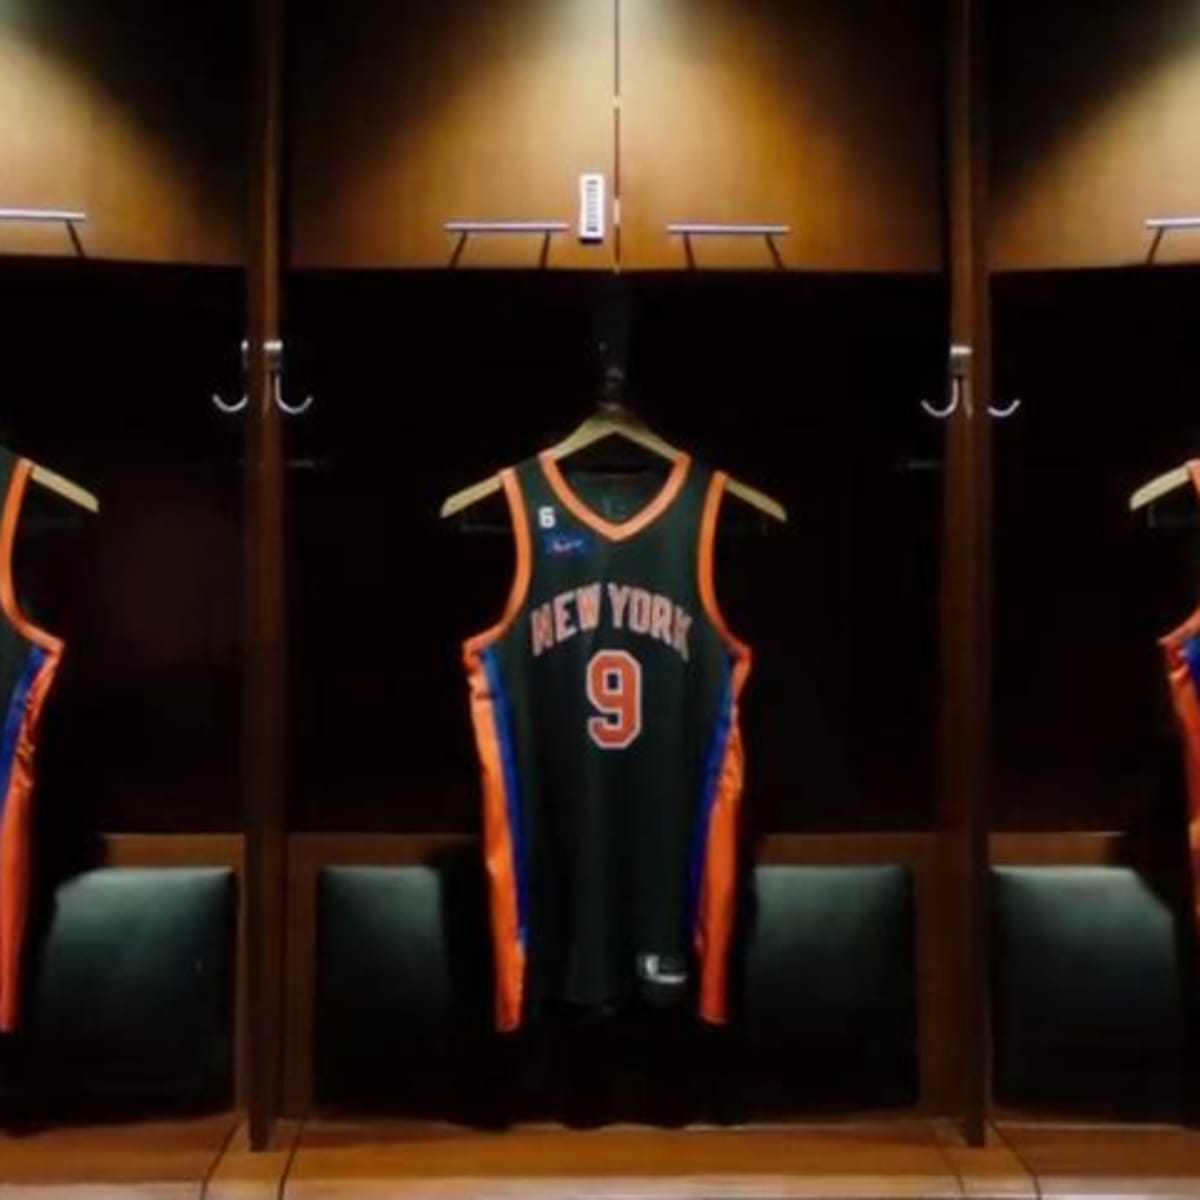 New York Knicks 22/23 City Edition Uniform: Bridging the Gap